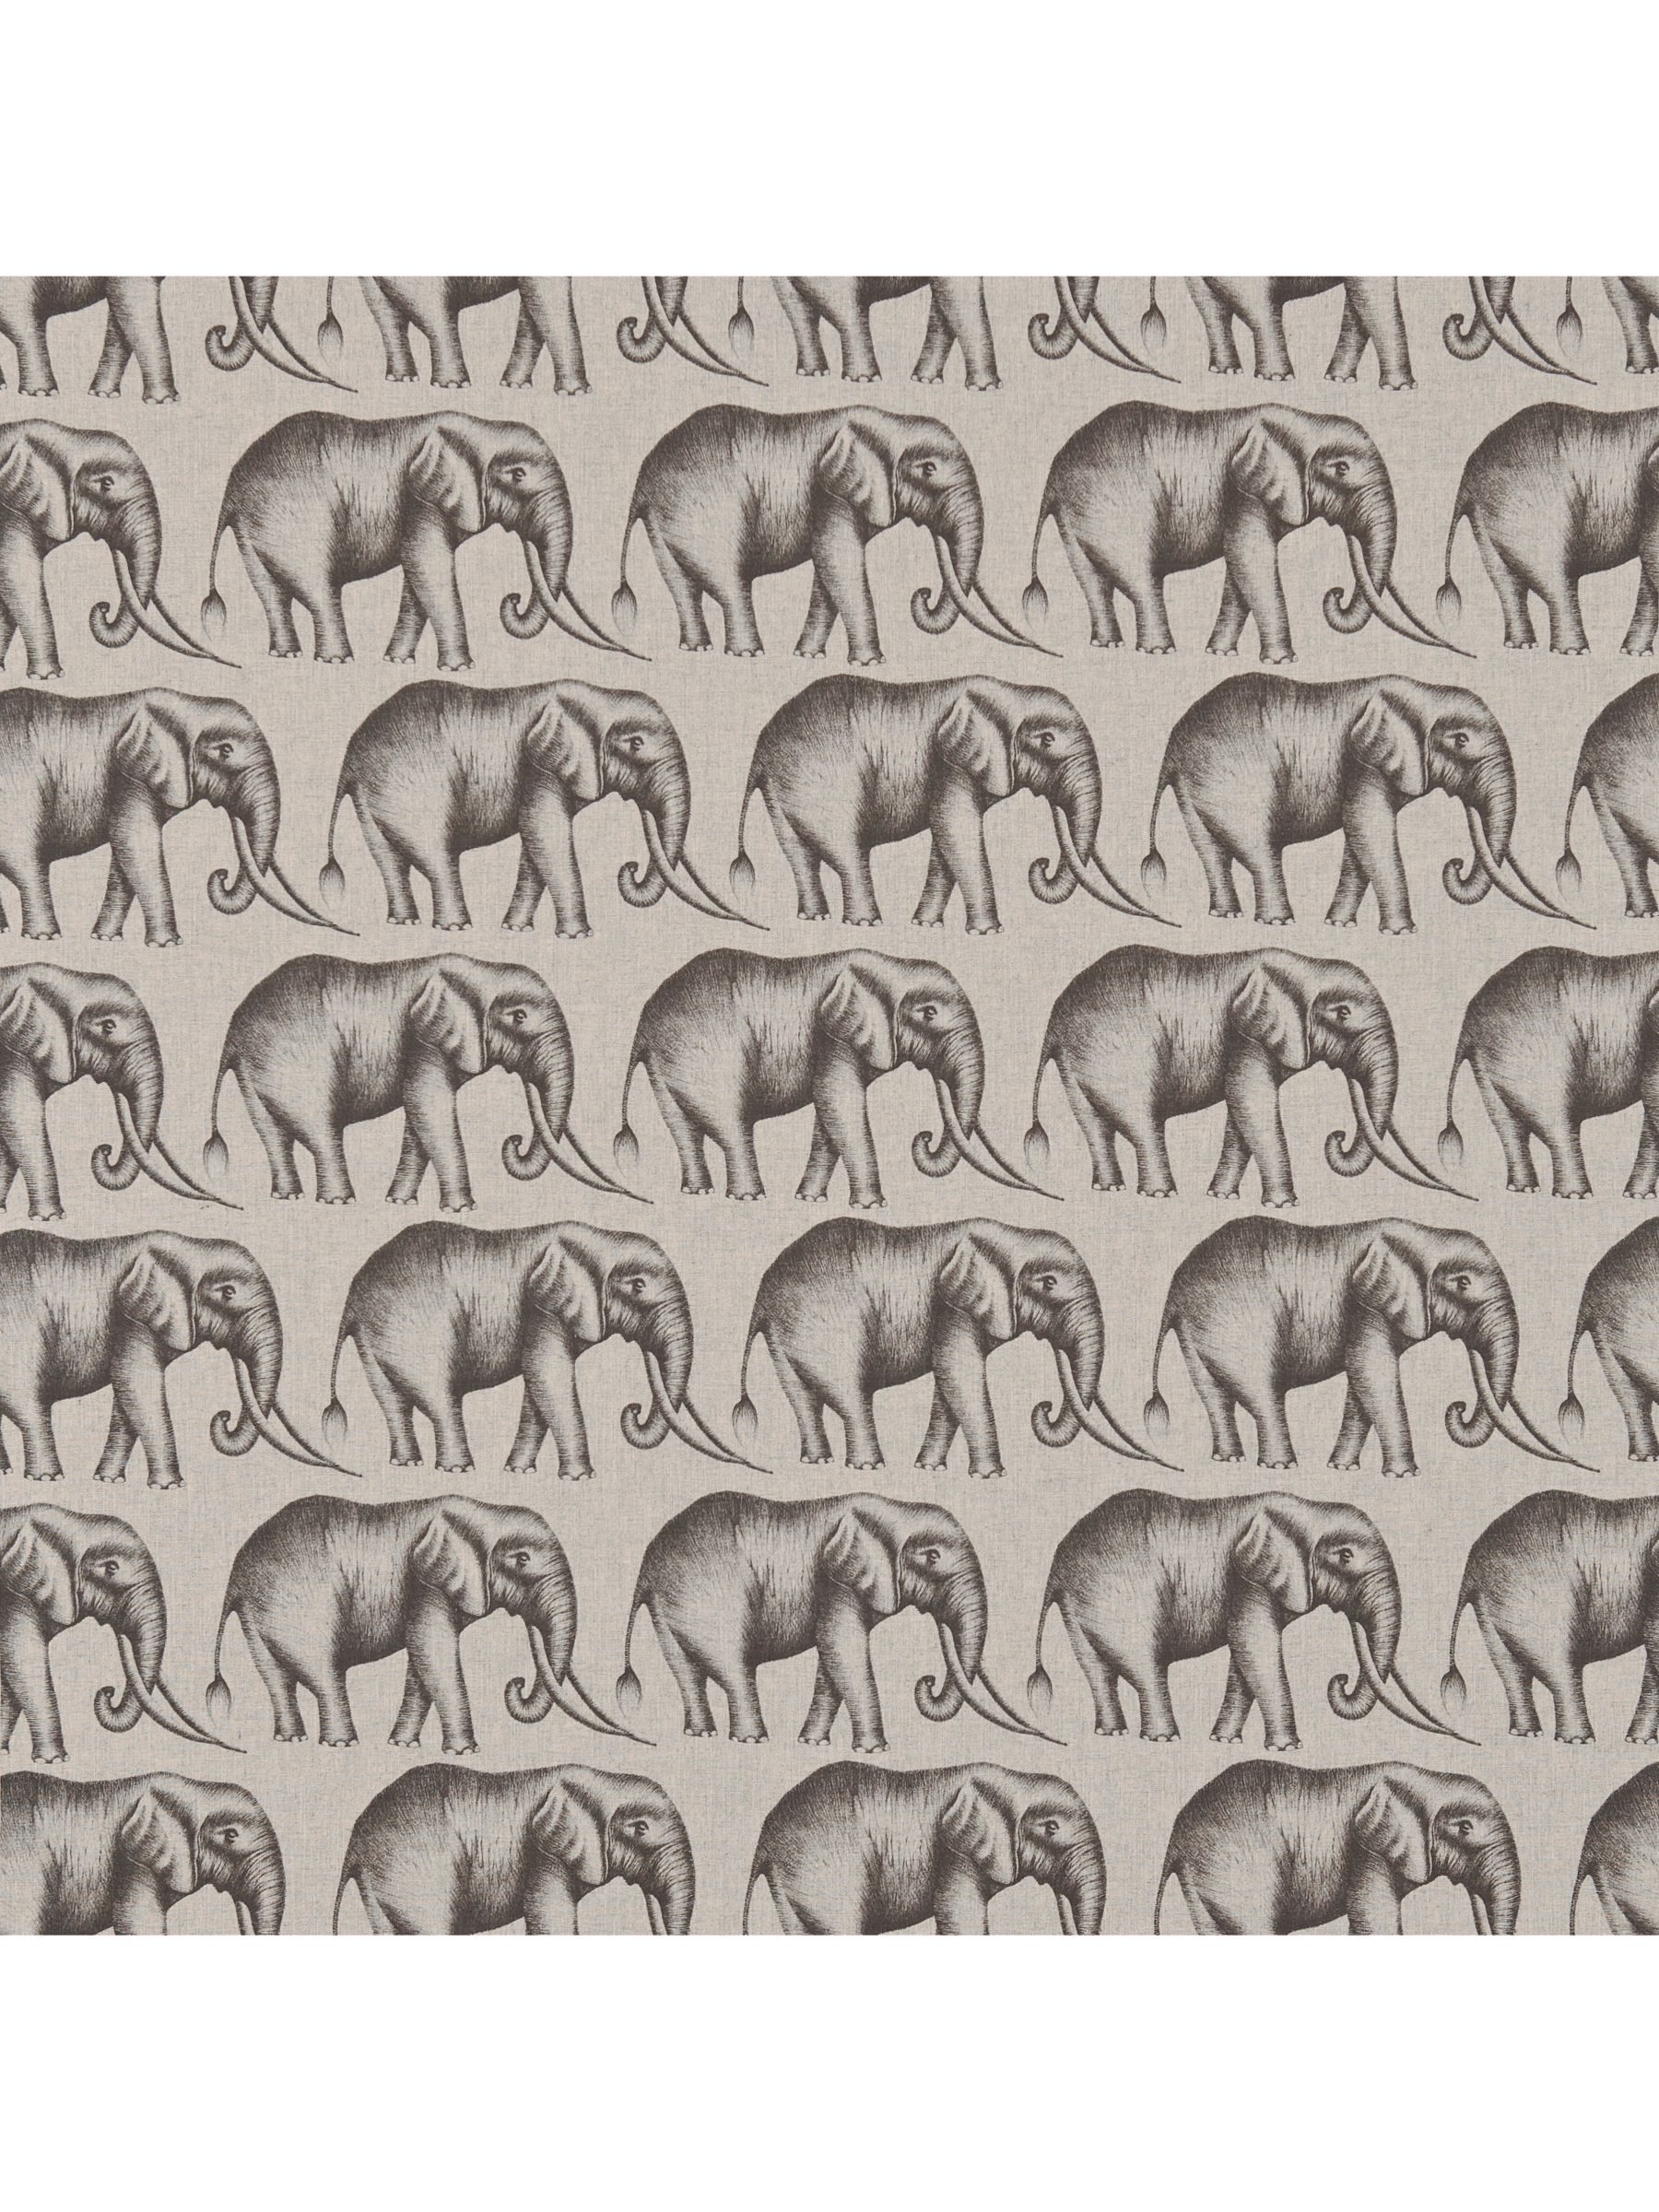 Harlequin Savanna Elephant Furnishing Fabric, Grey